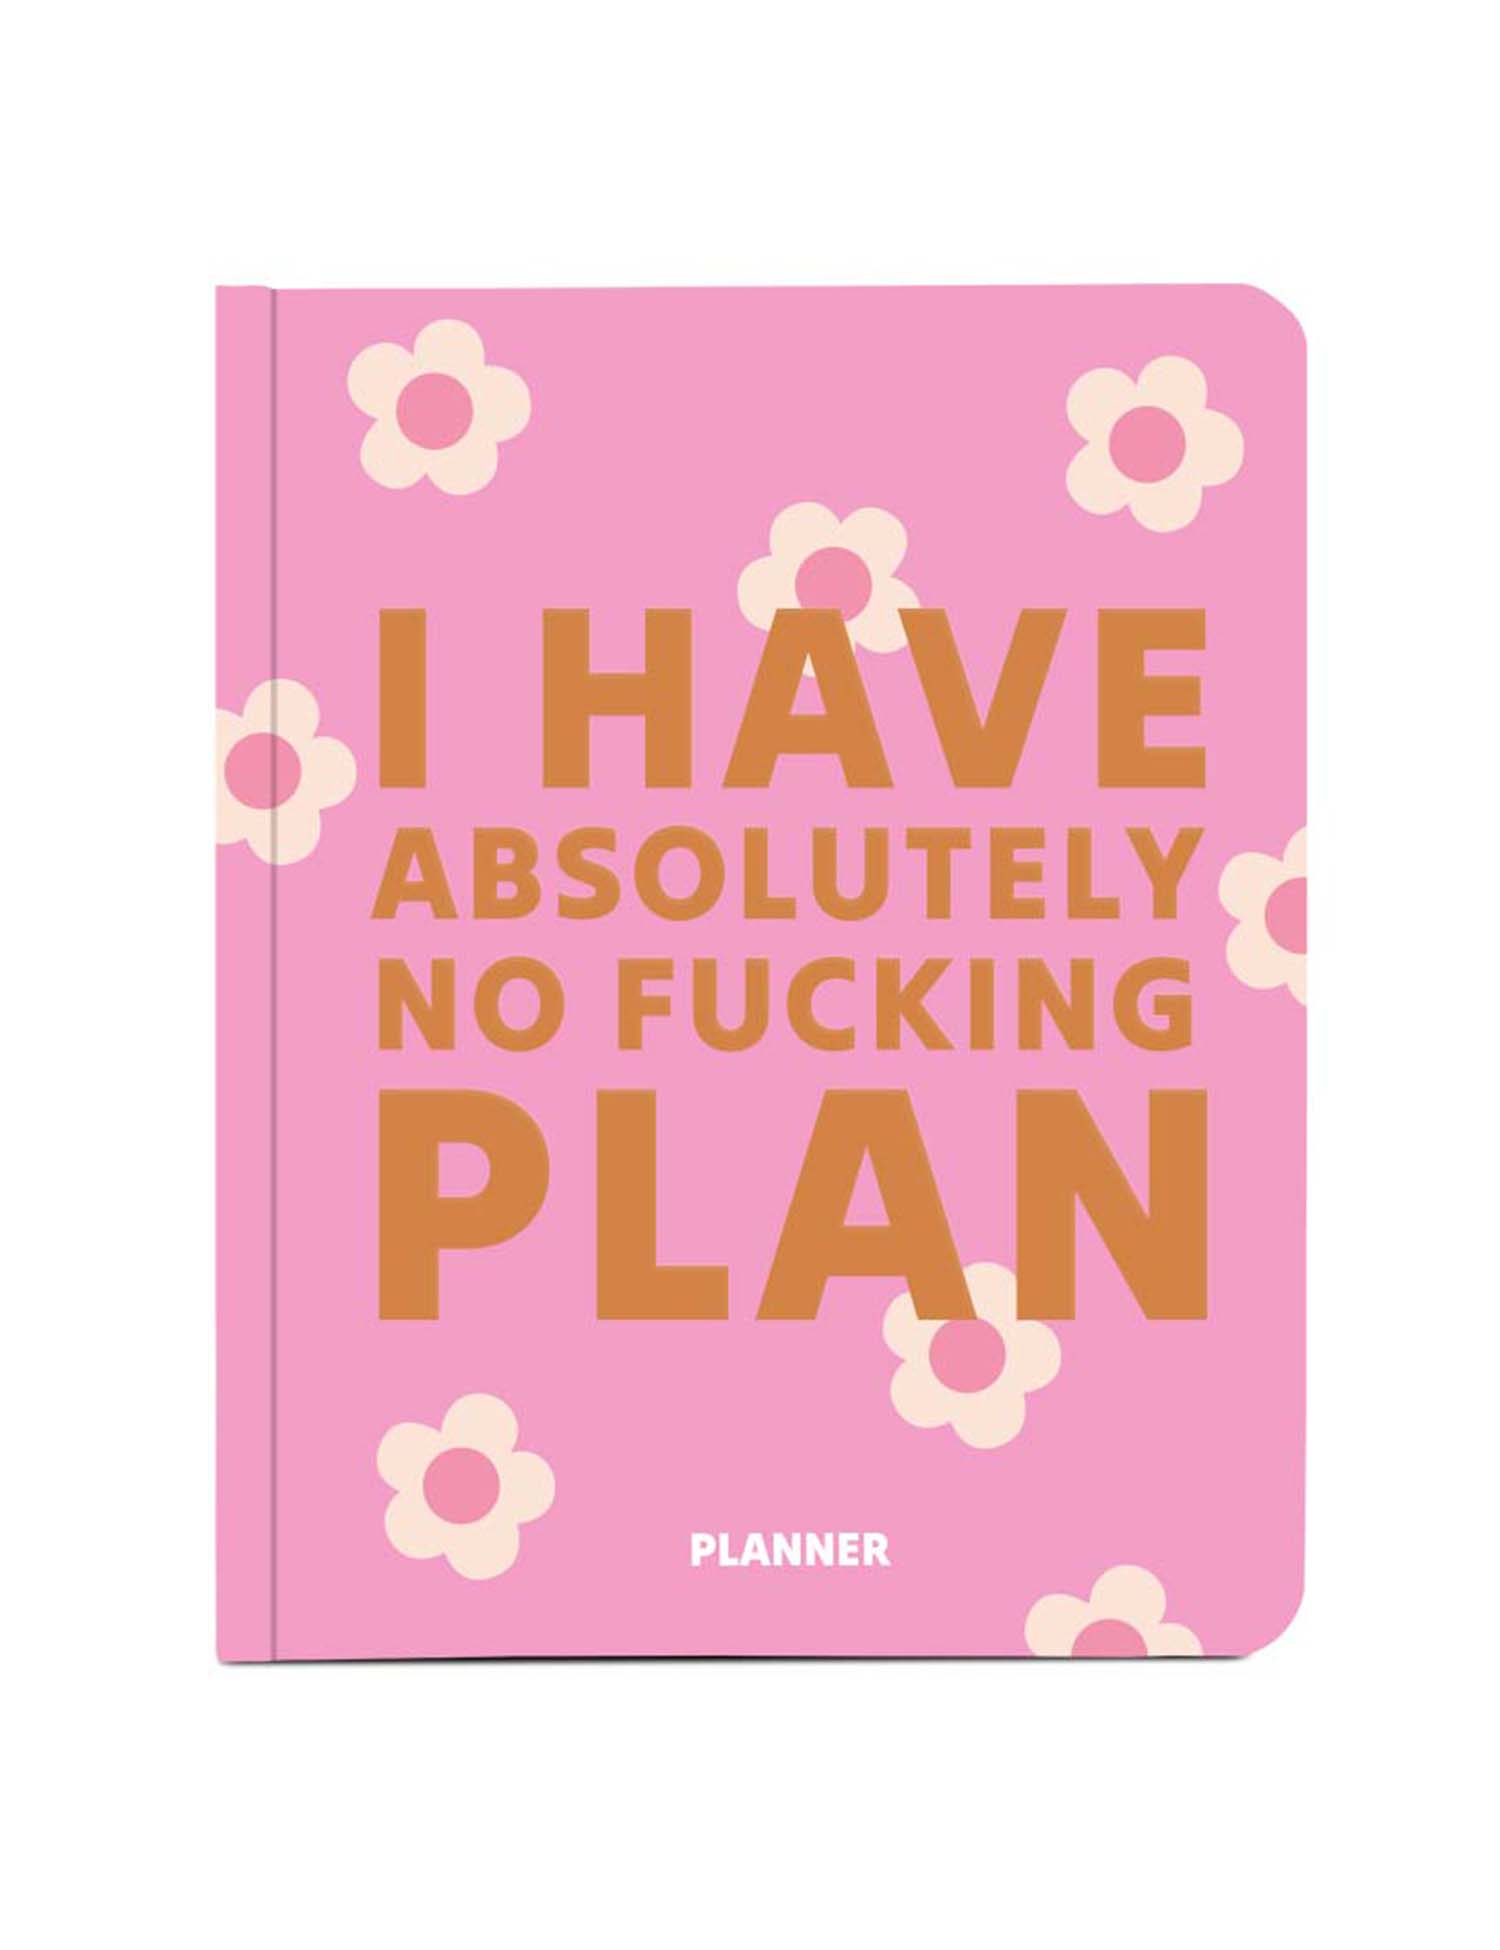 Картинка Планер «I HAVE ABSOLUTELY NO PLAN» рожевий